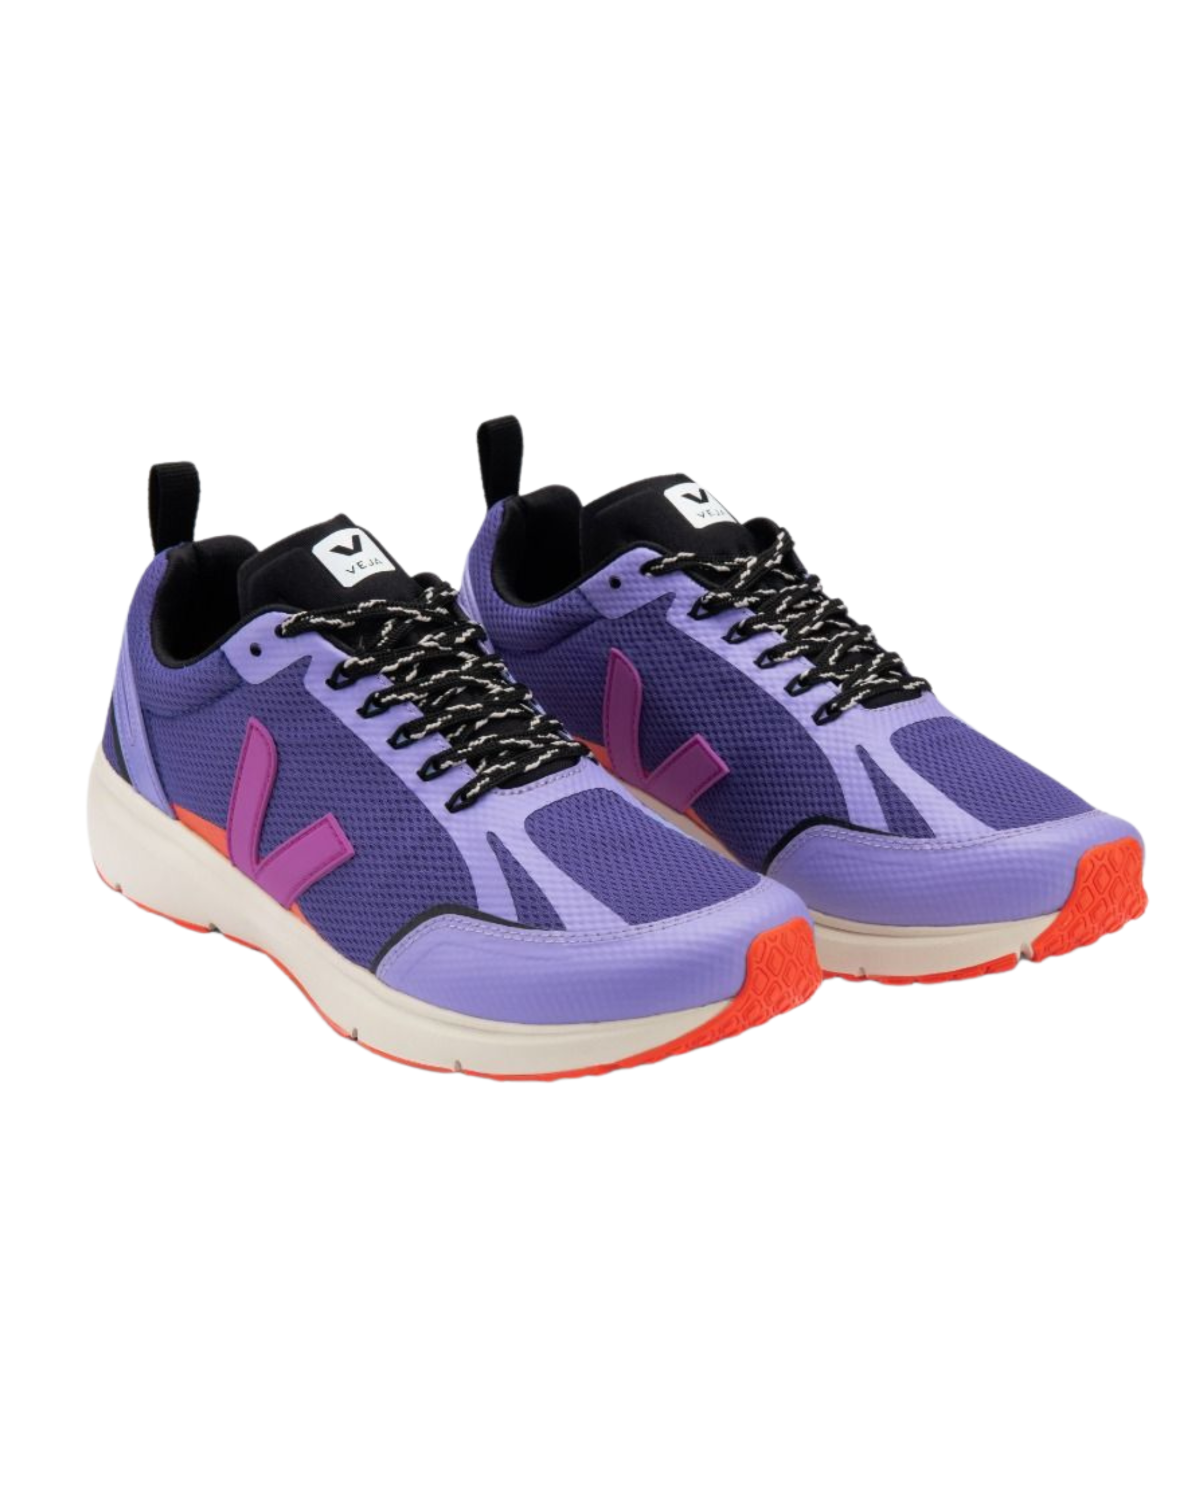 Chaussures de Running Veja Condor 2 Femme Violet, vue avant